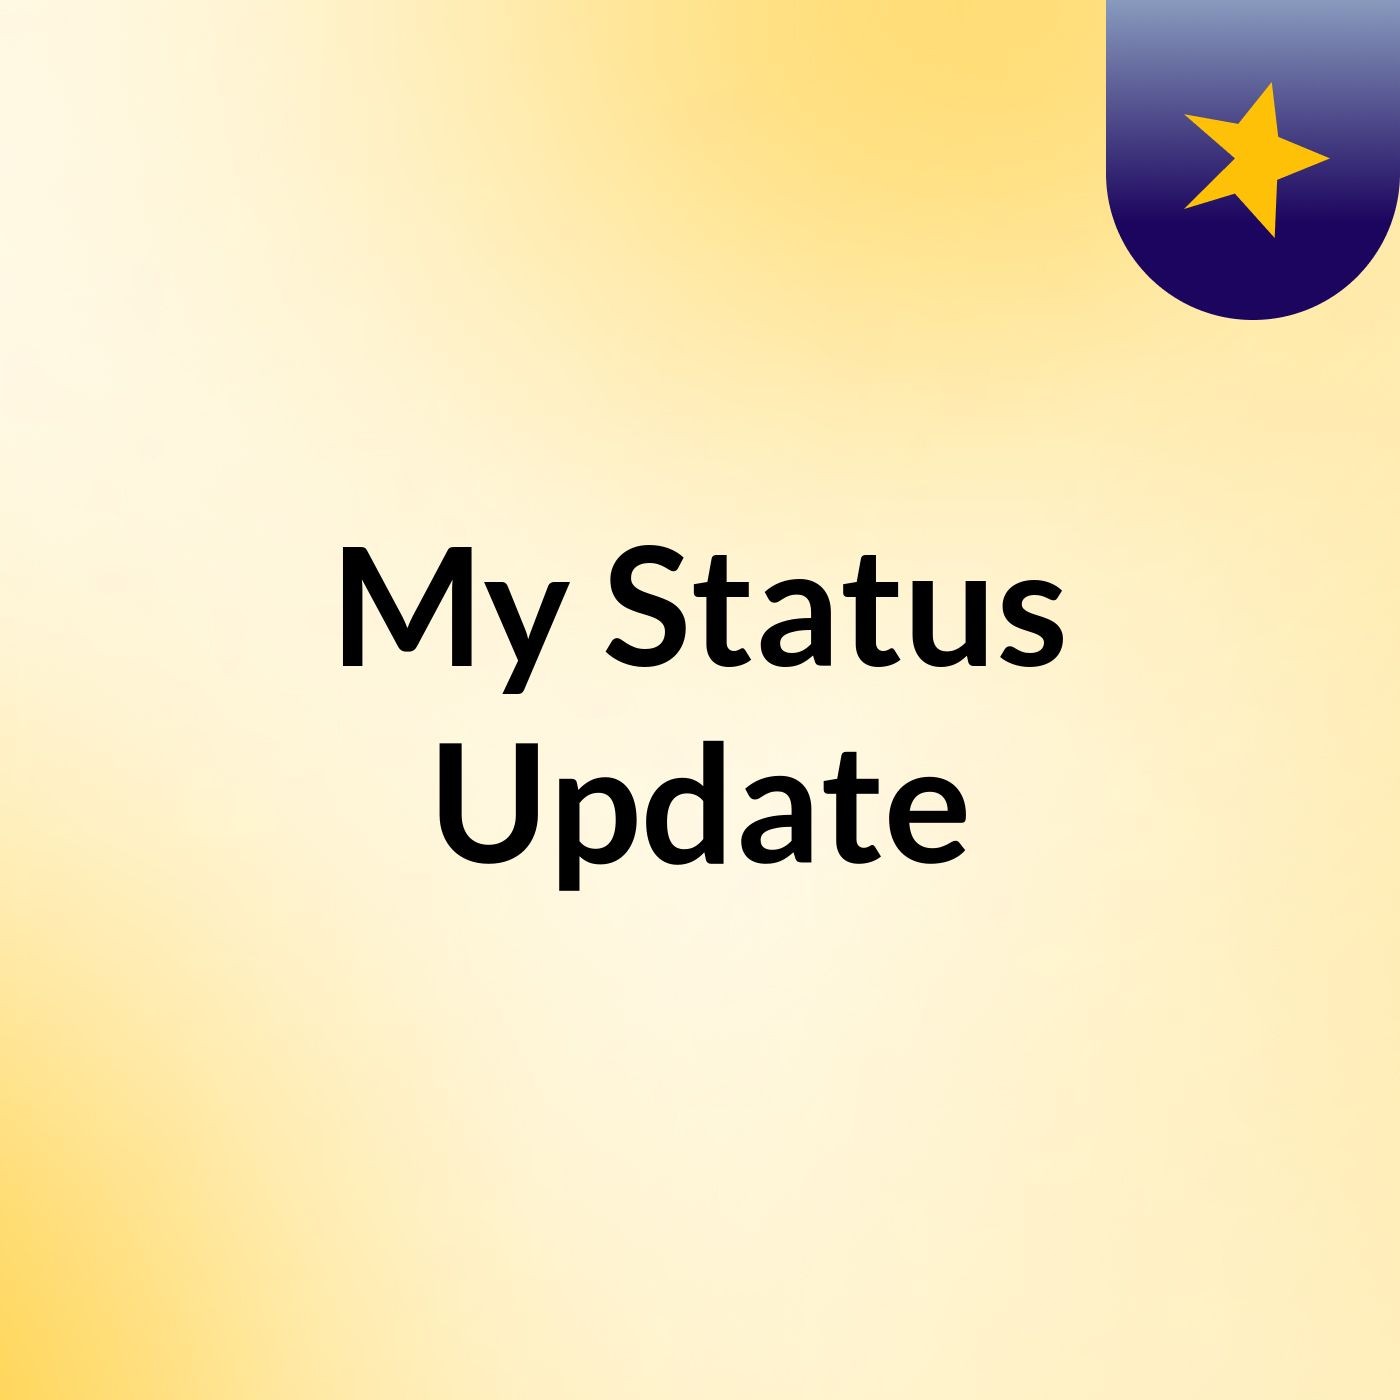 Episode 2 - My Status Update